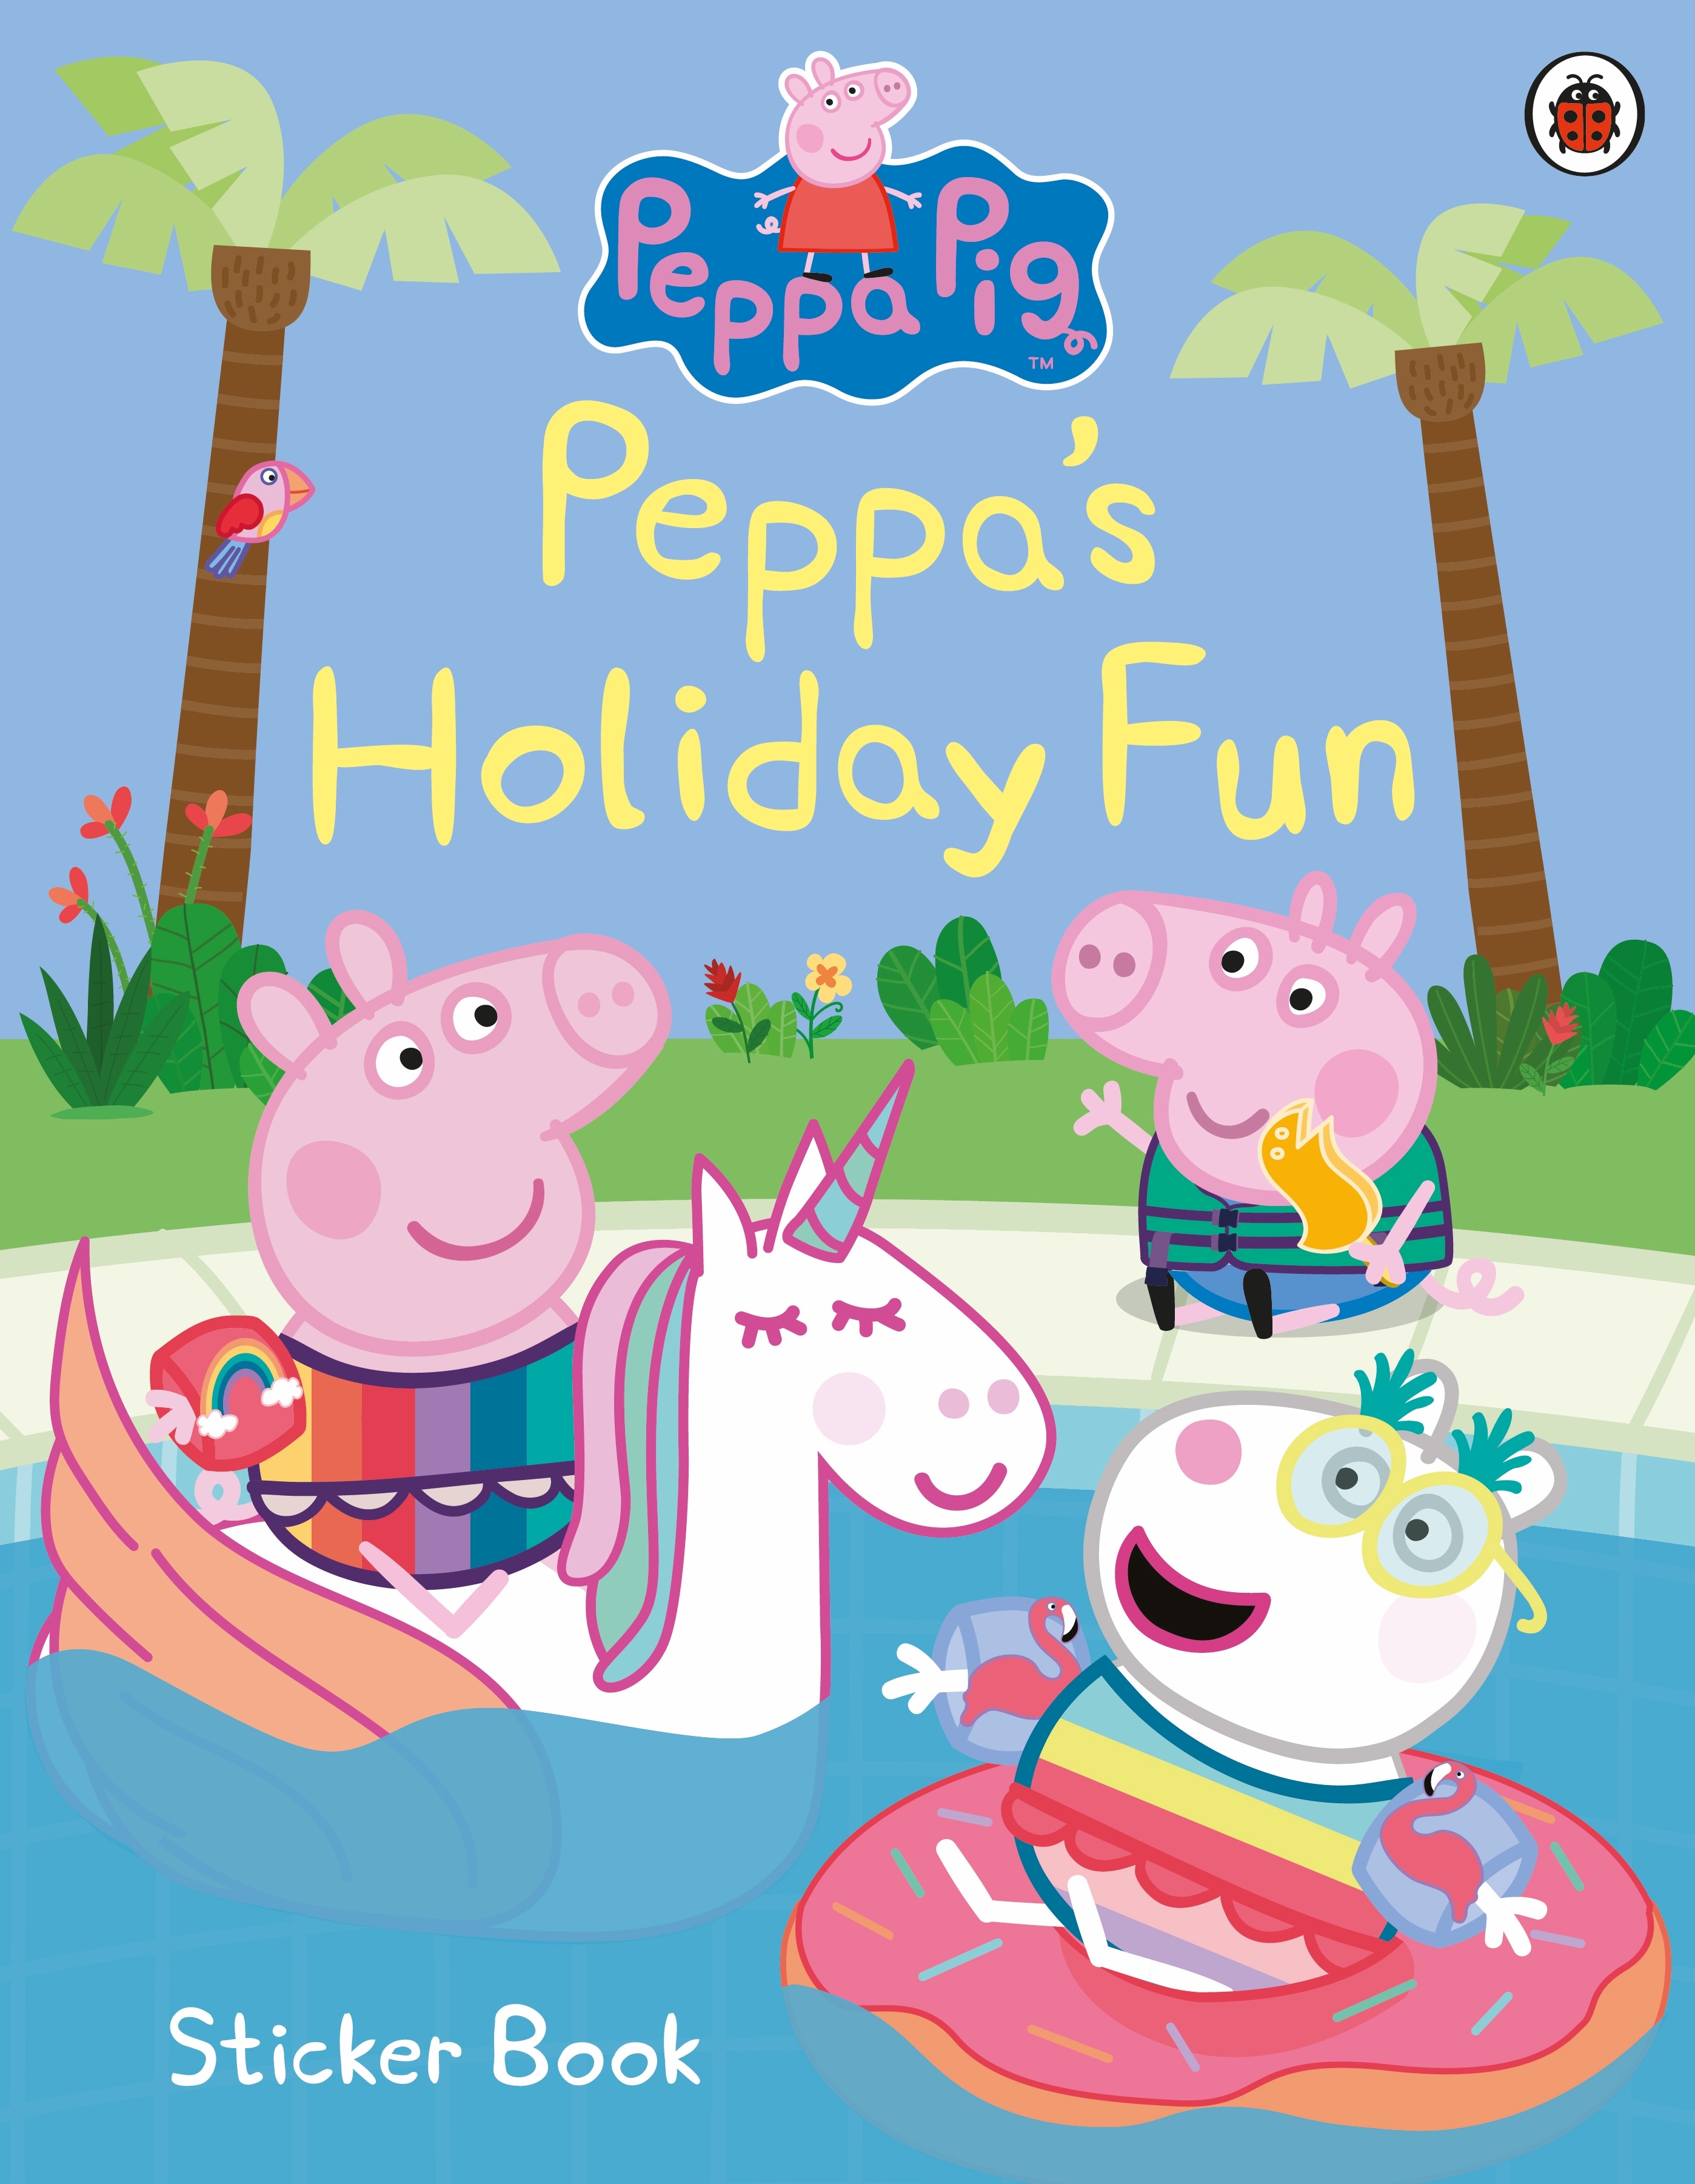 Book “Peppa Pig: Peppa's Holiday Fun Sticker Book” by Peppa Pig — June 24, 2021